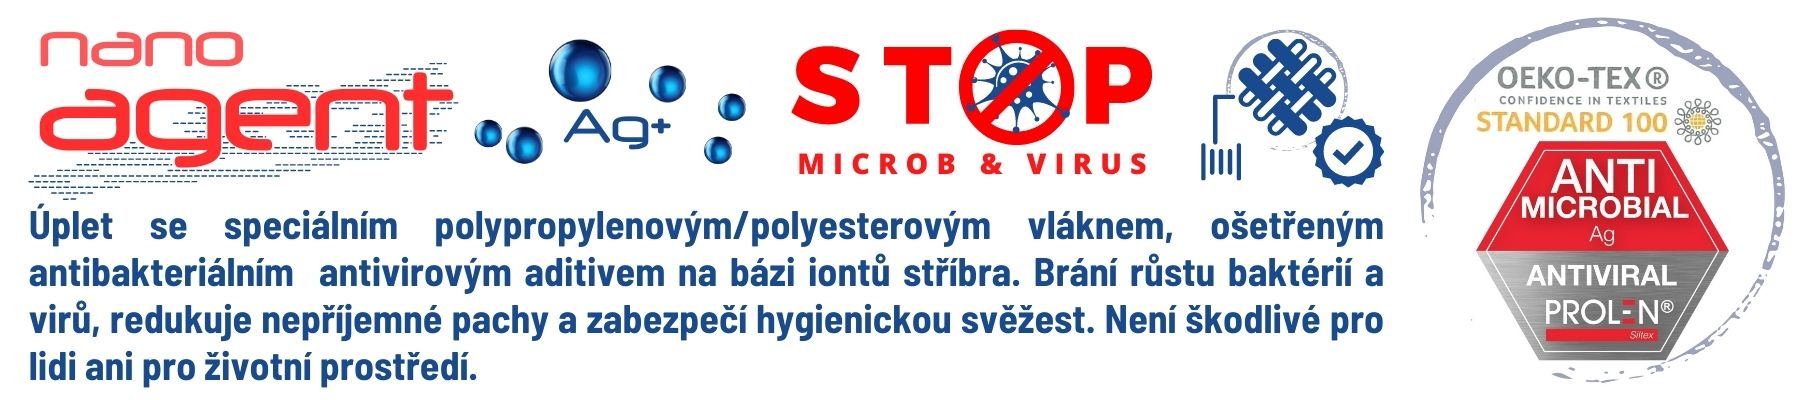 STOP MICROB